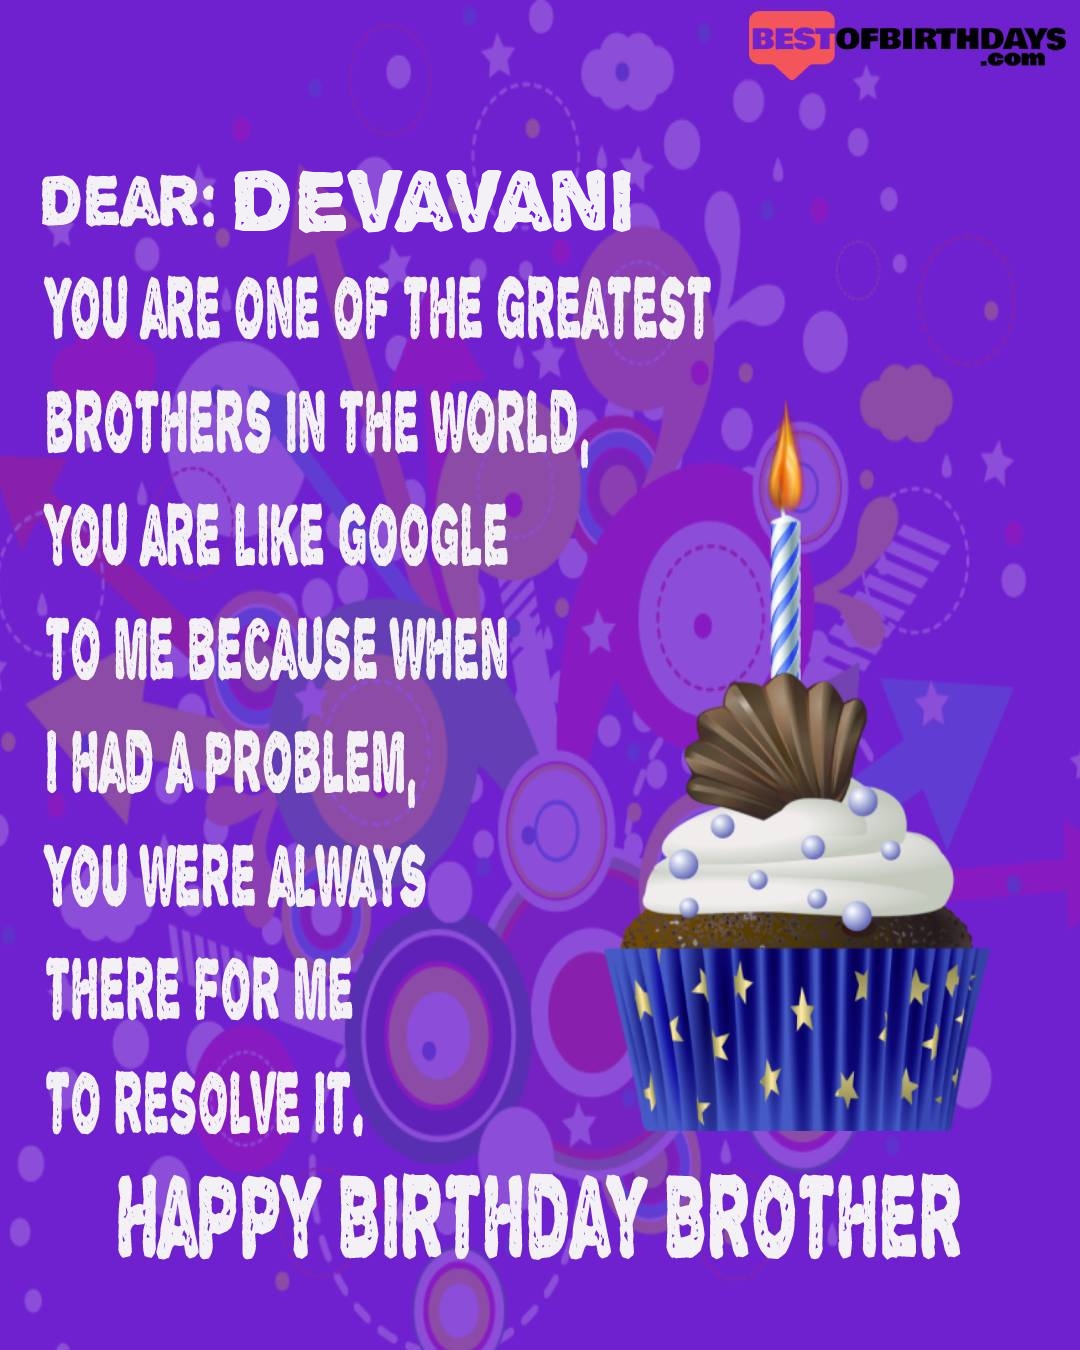 Happy birthday devavani bhai brother bro